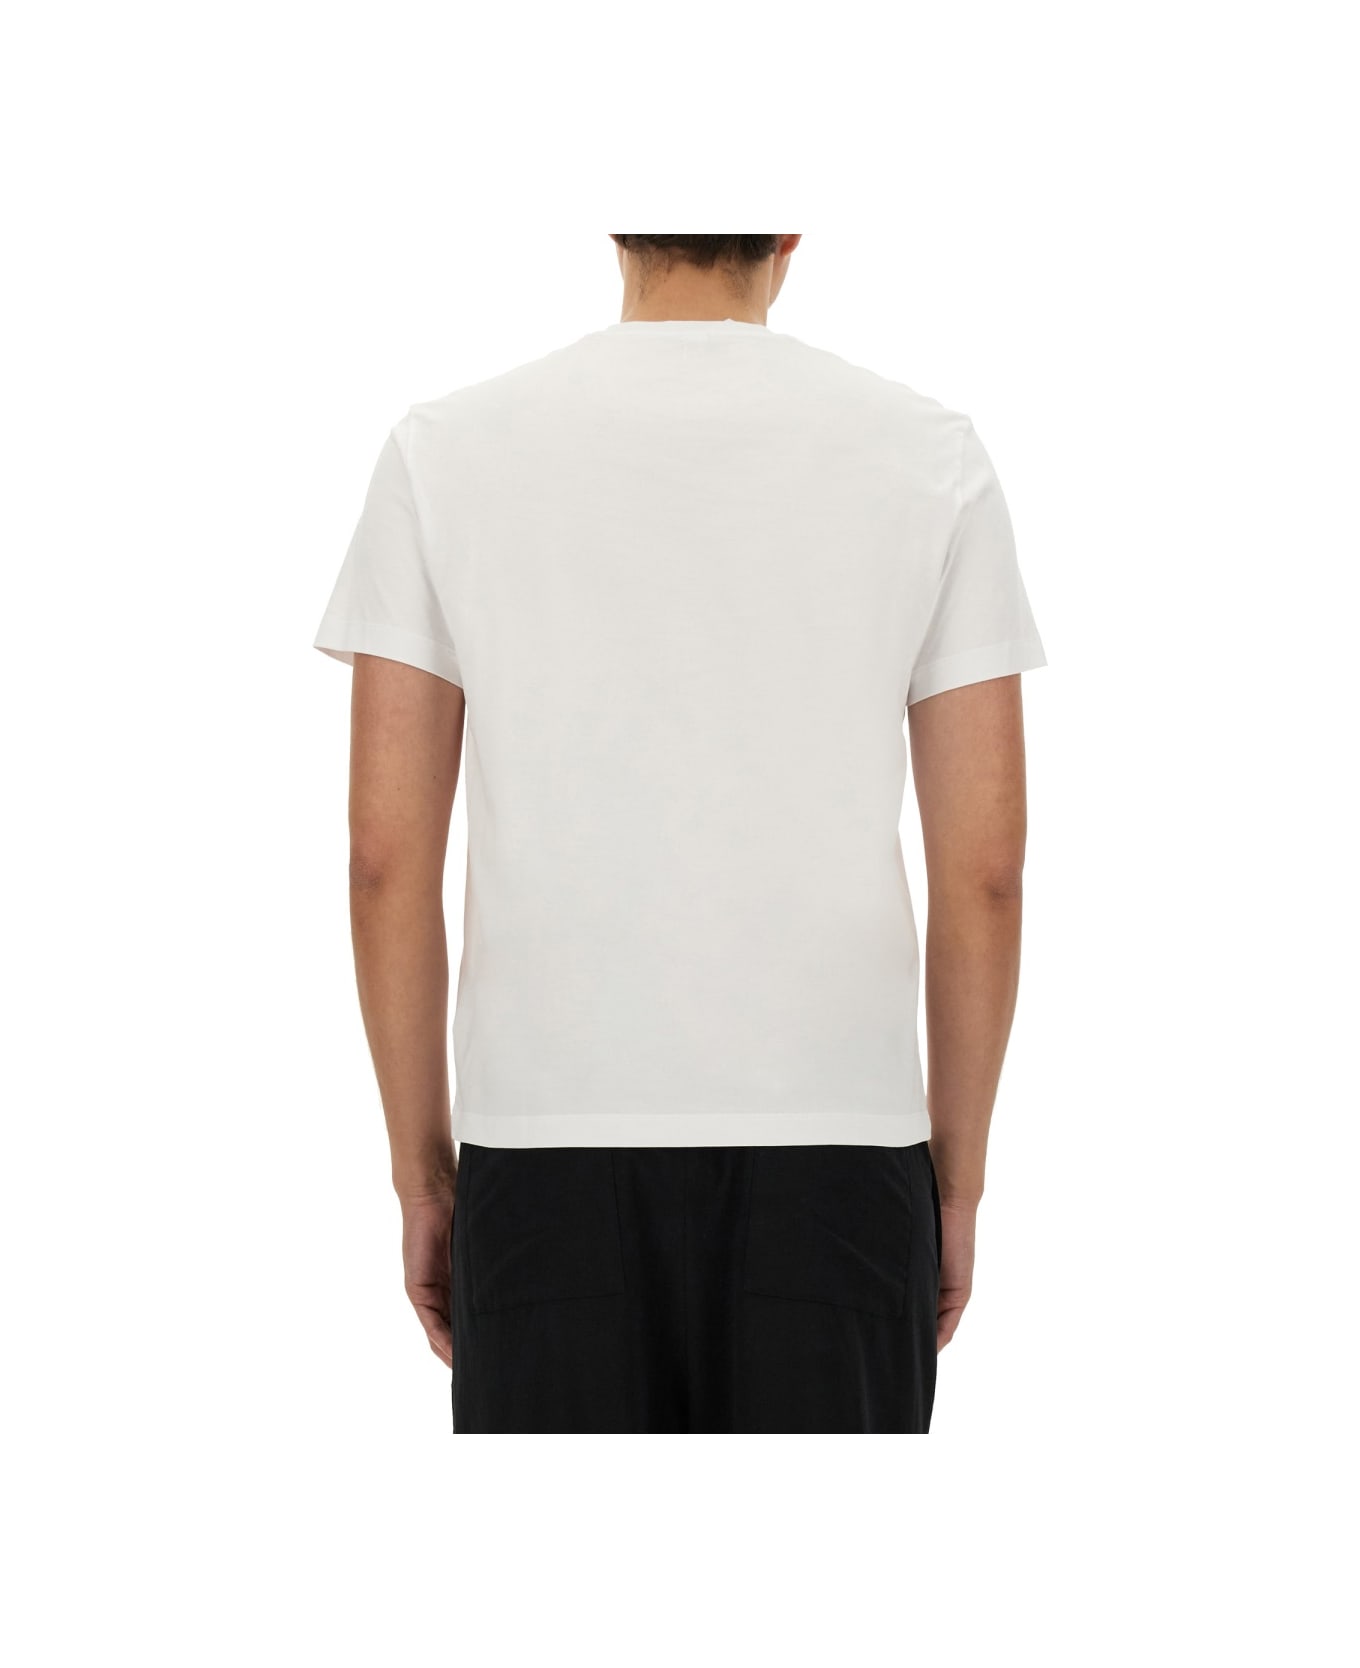 Neil Barrett T-shirt With Print - N White Black